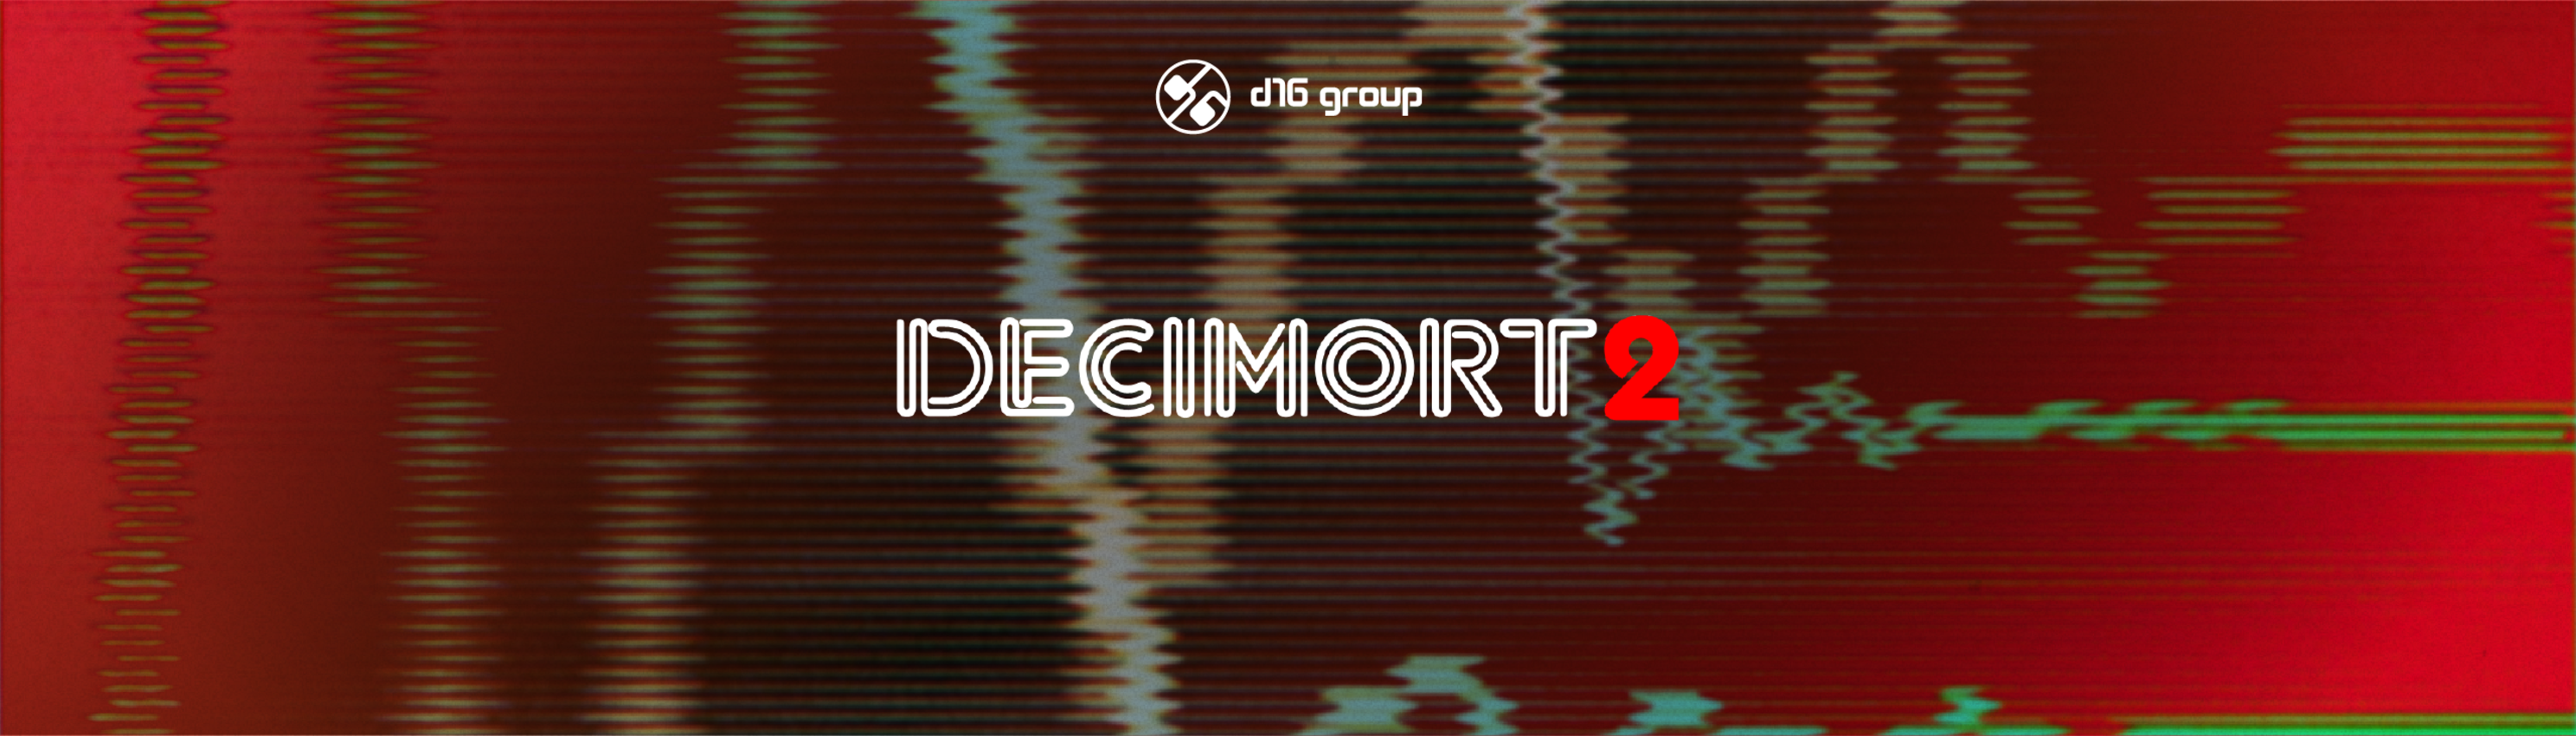 d16 group decimort 2 download rar torrent